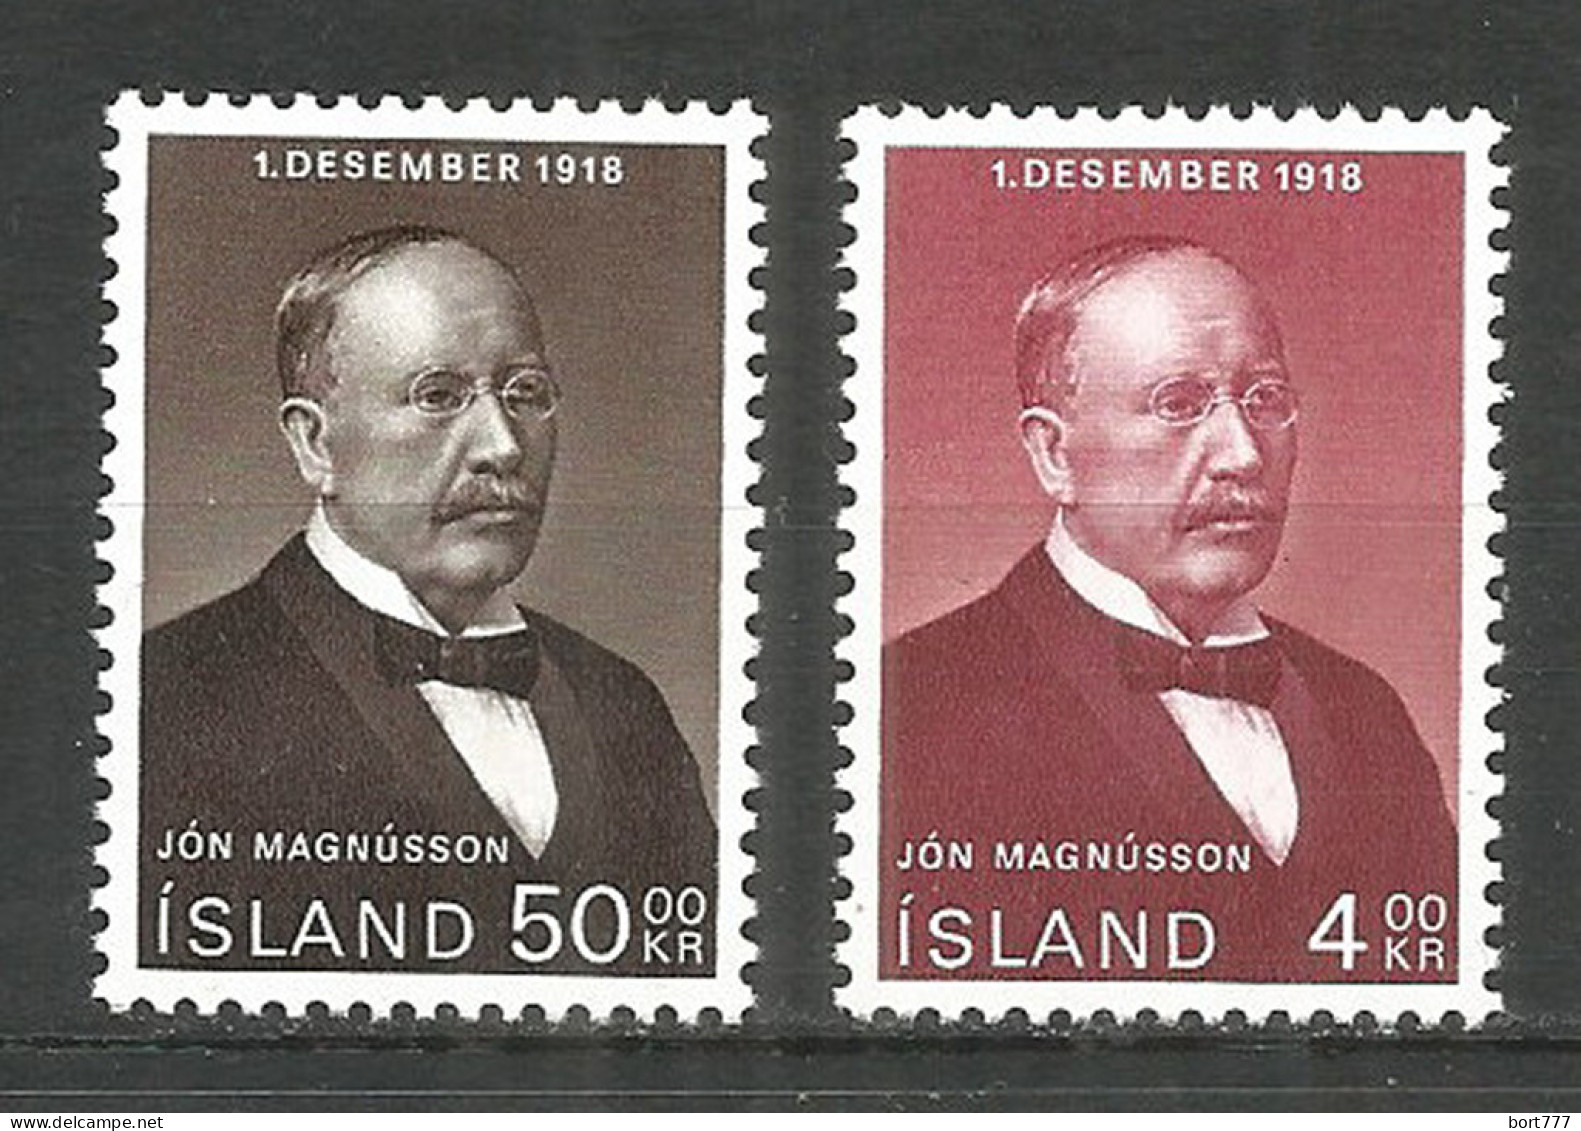 ICELAND 1968 Mint Stamps MNH(**) Set  - Neufs